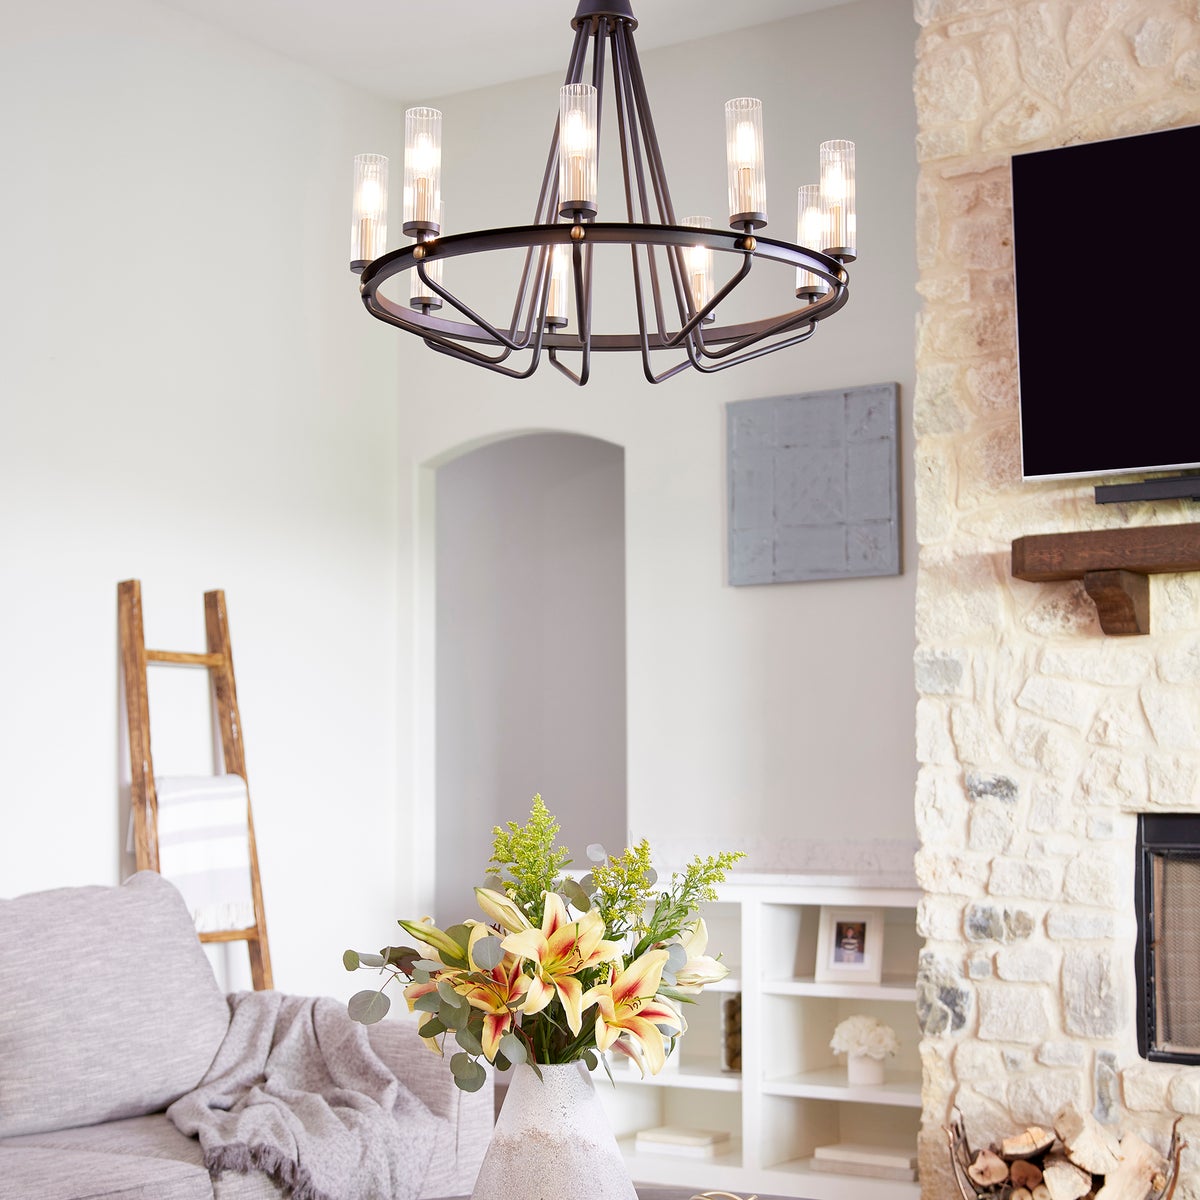 Ring Chandelier in a living room, providing radiant lighting. Modern design enhances energy in any interior space.